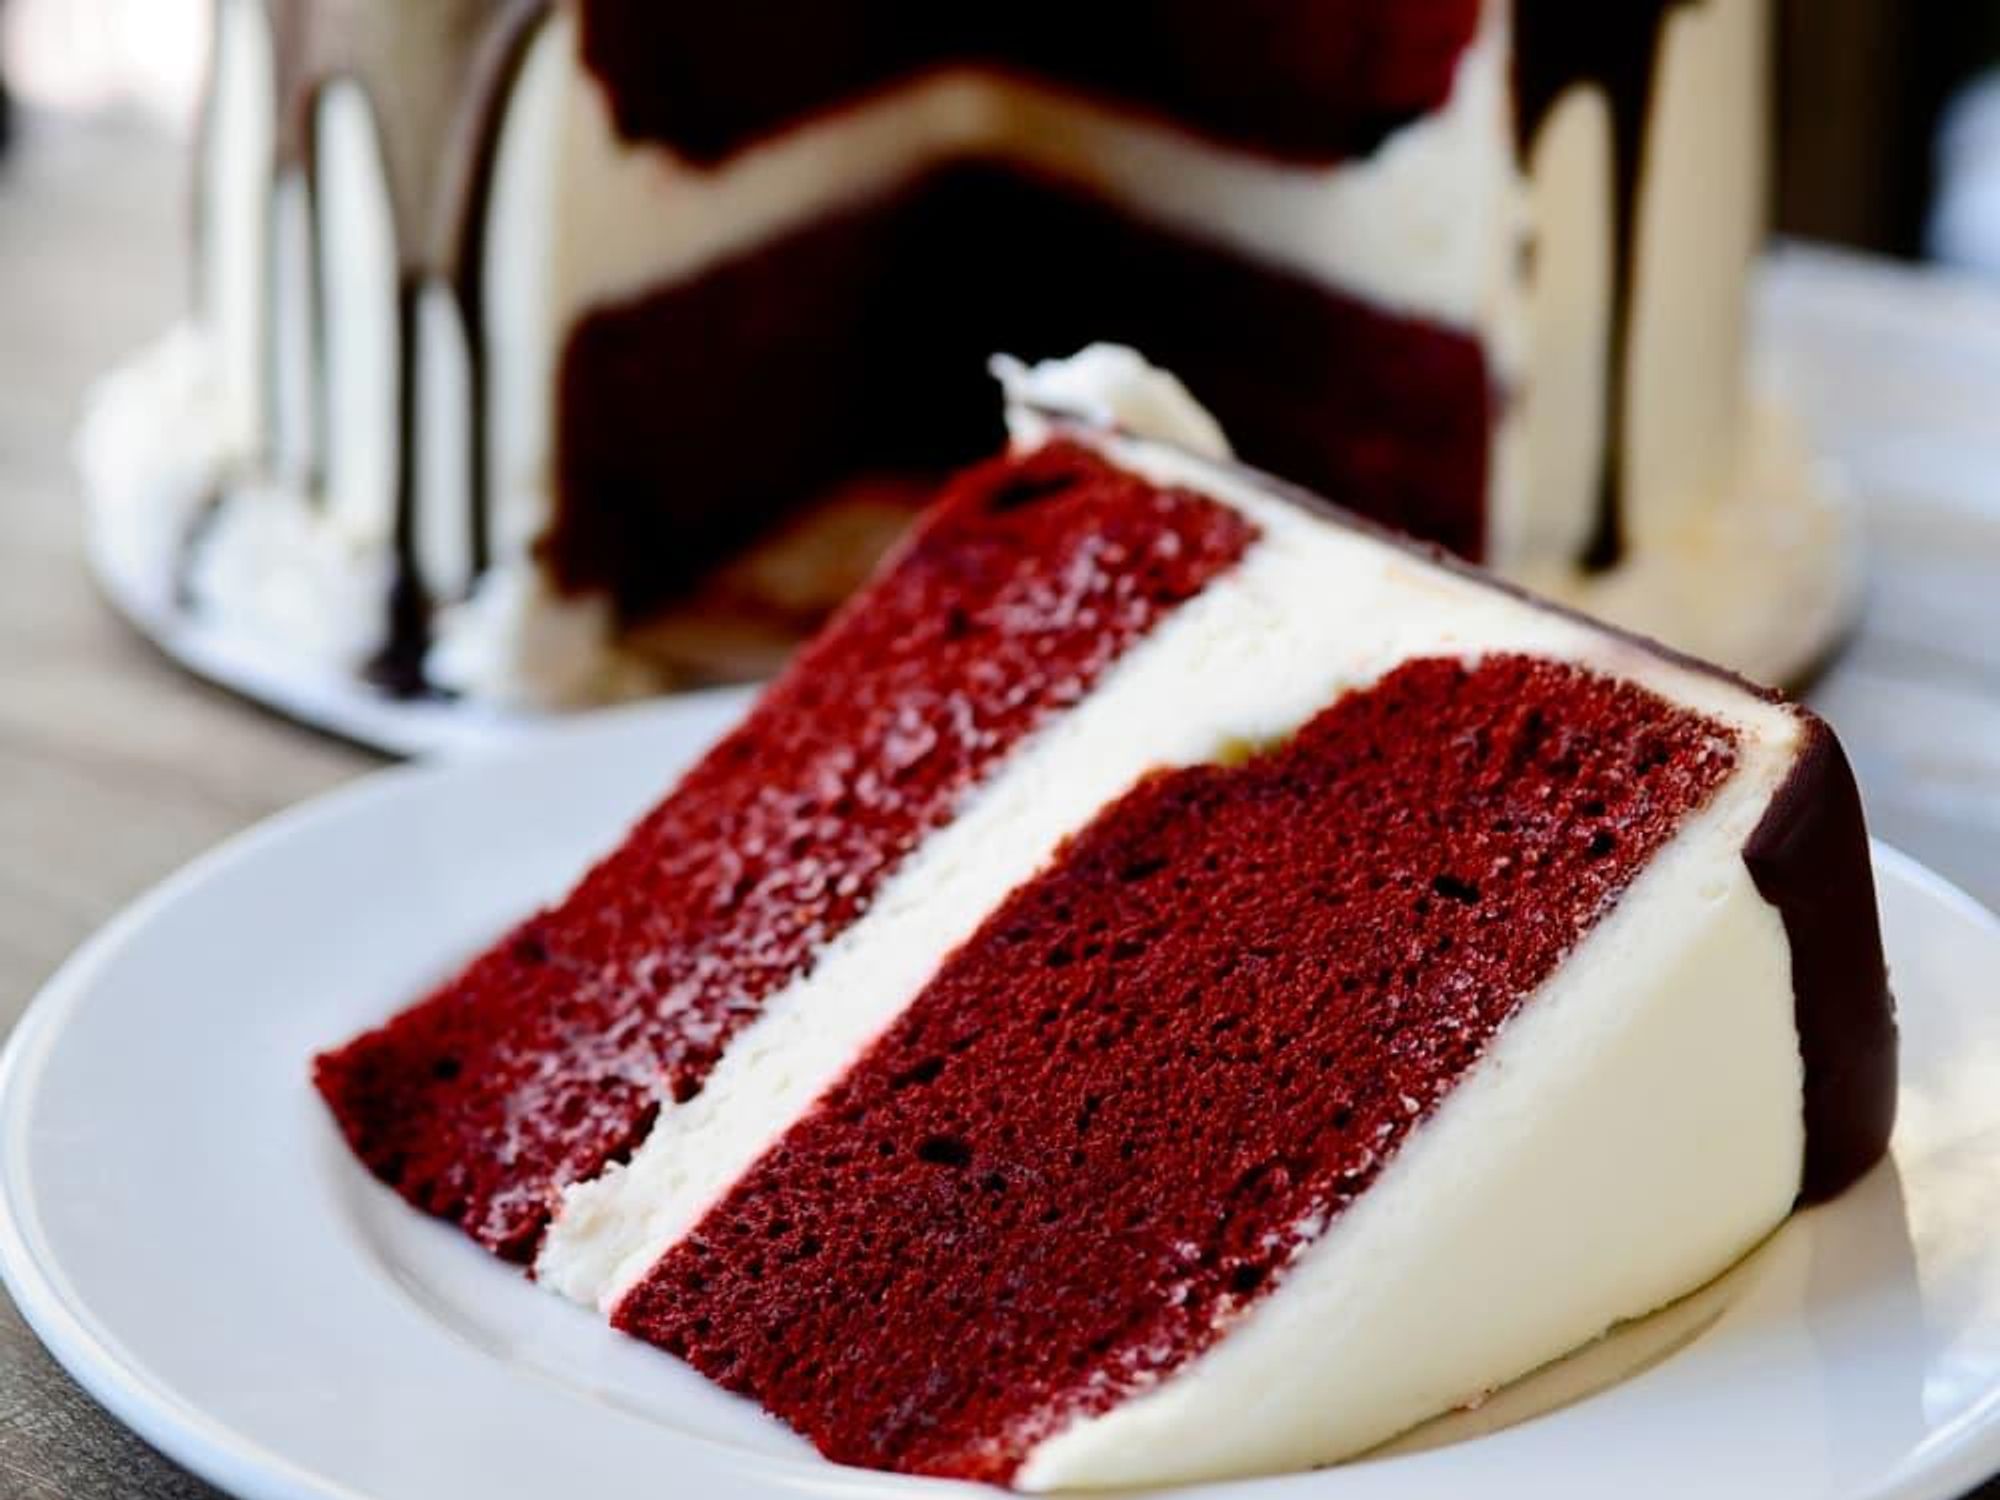 Ooh La La, red velvet cake